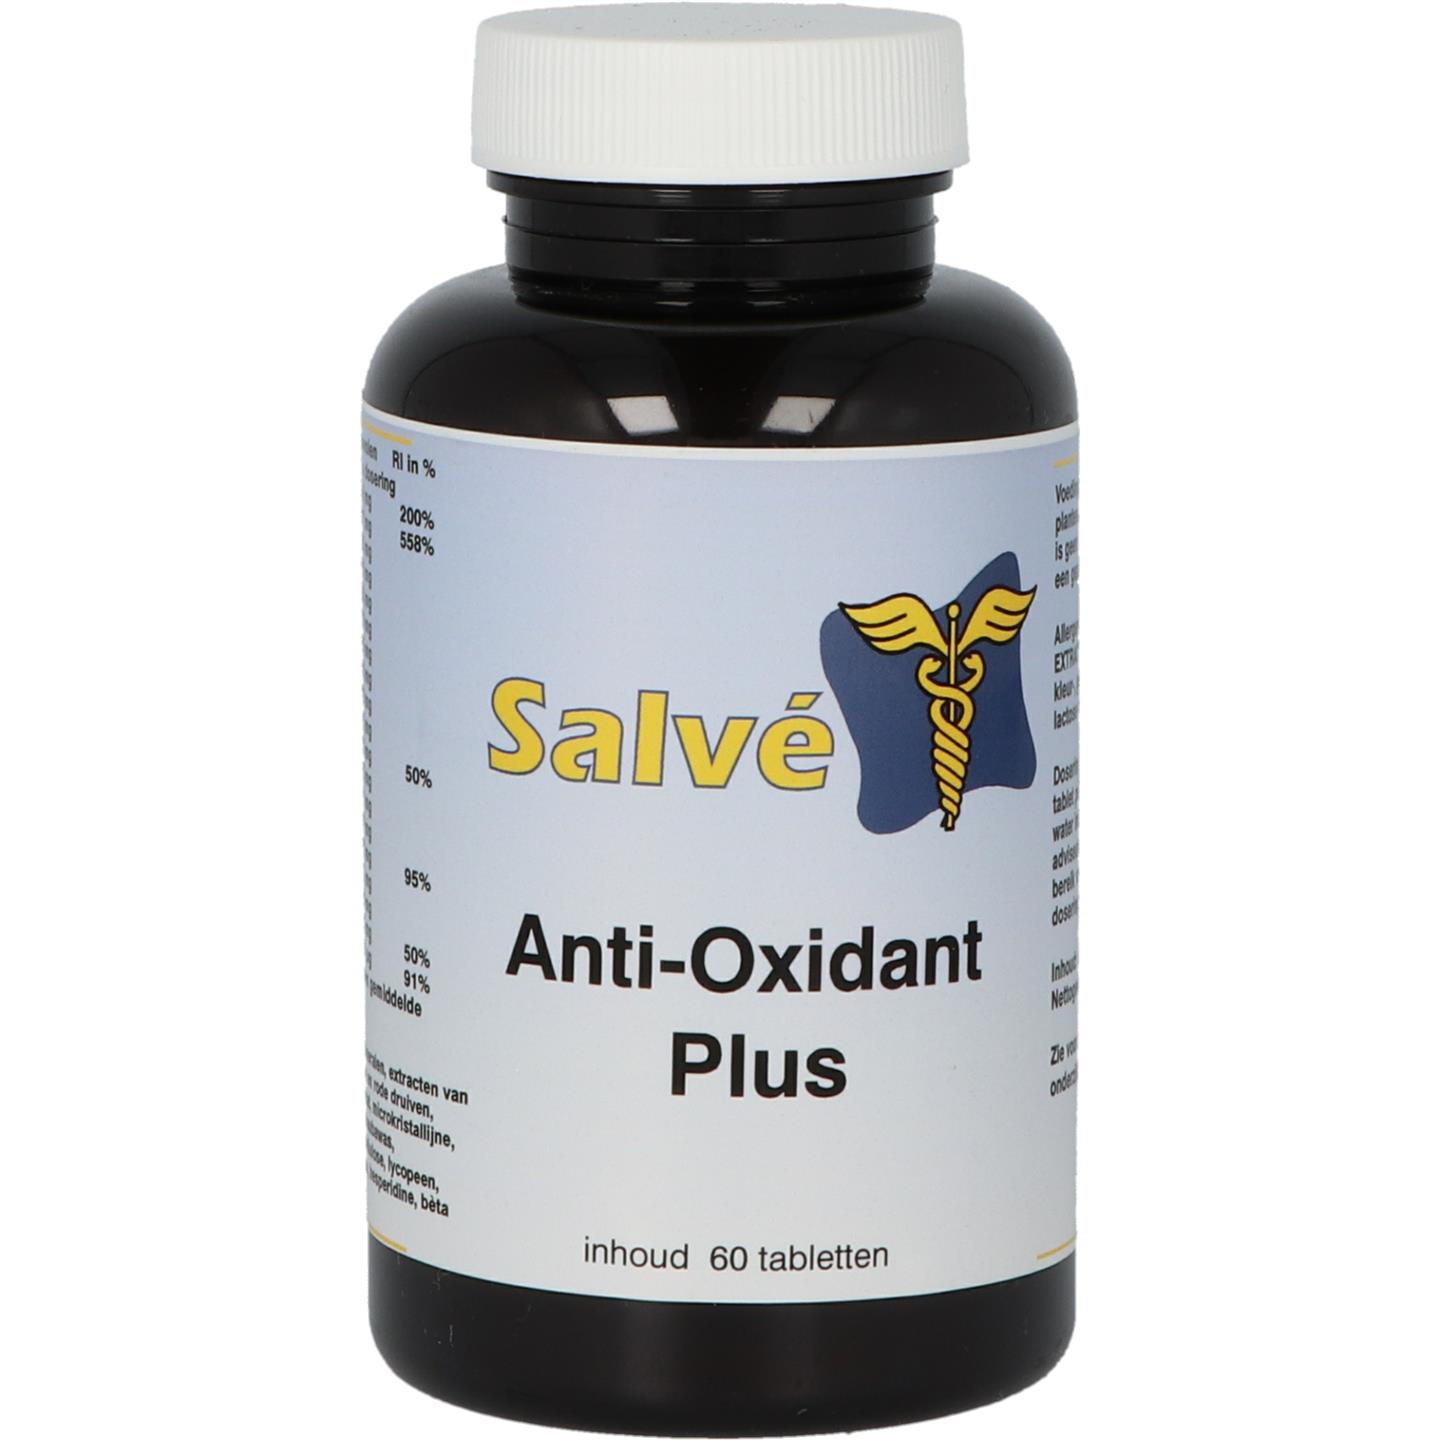 Anti-Oxidant Plus